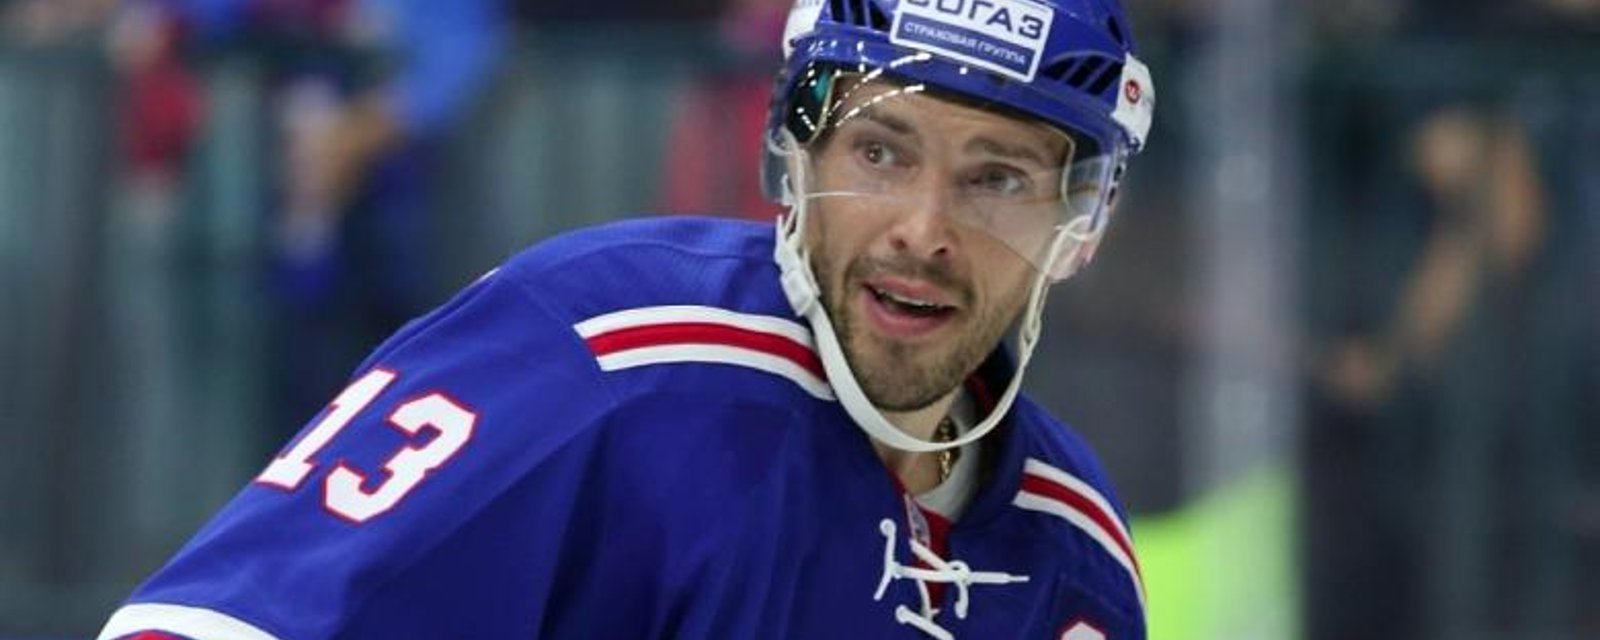 Pavel Datsyuk makes KHL goalie look ridiculous on beauty backhand goal.